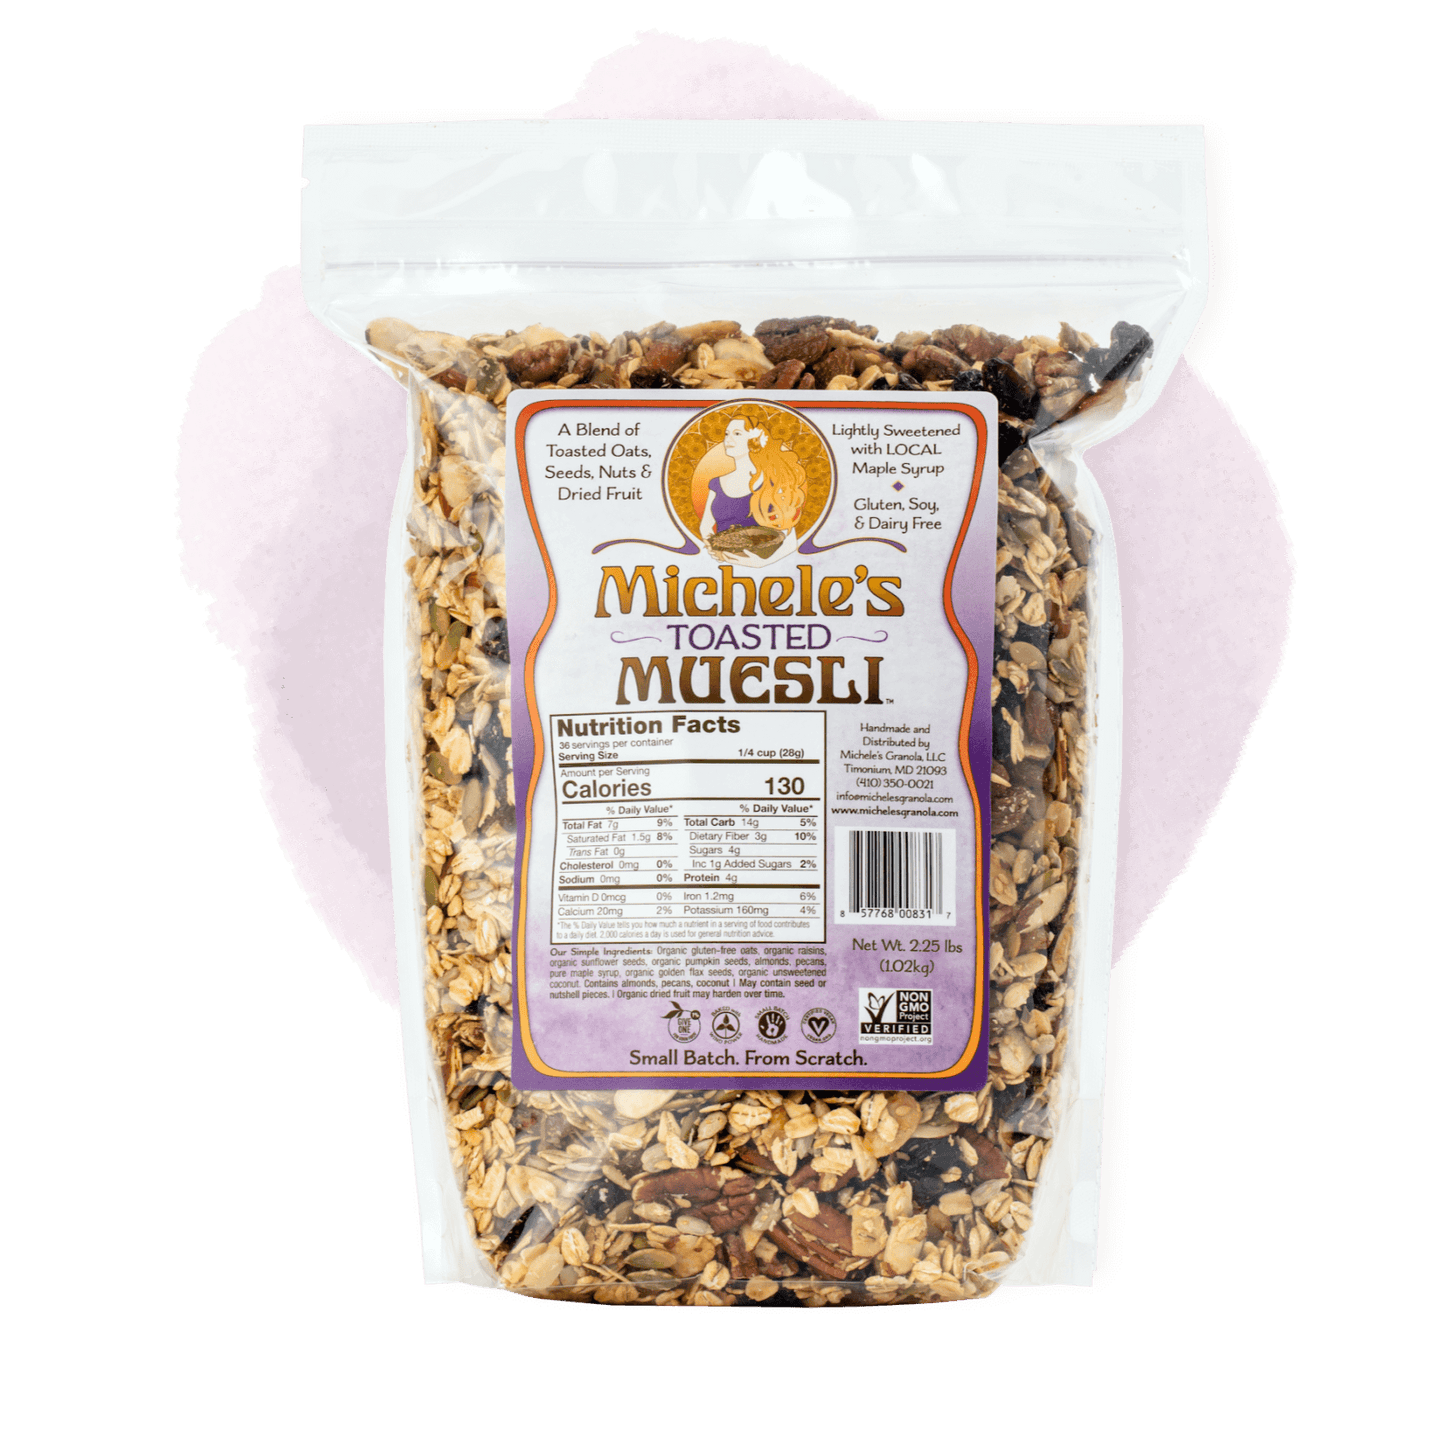 Michele's Toasted Muesli in bulk